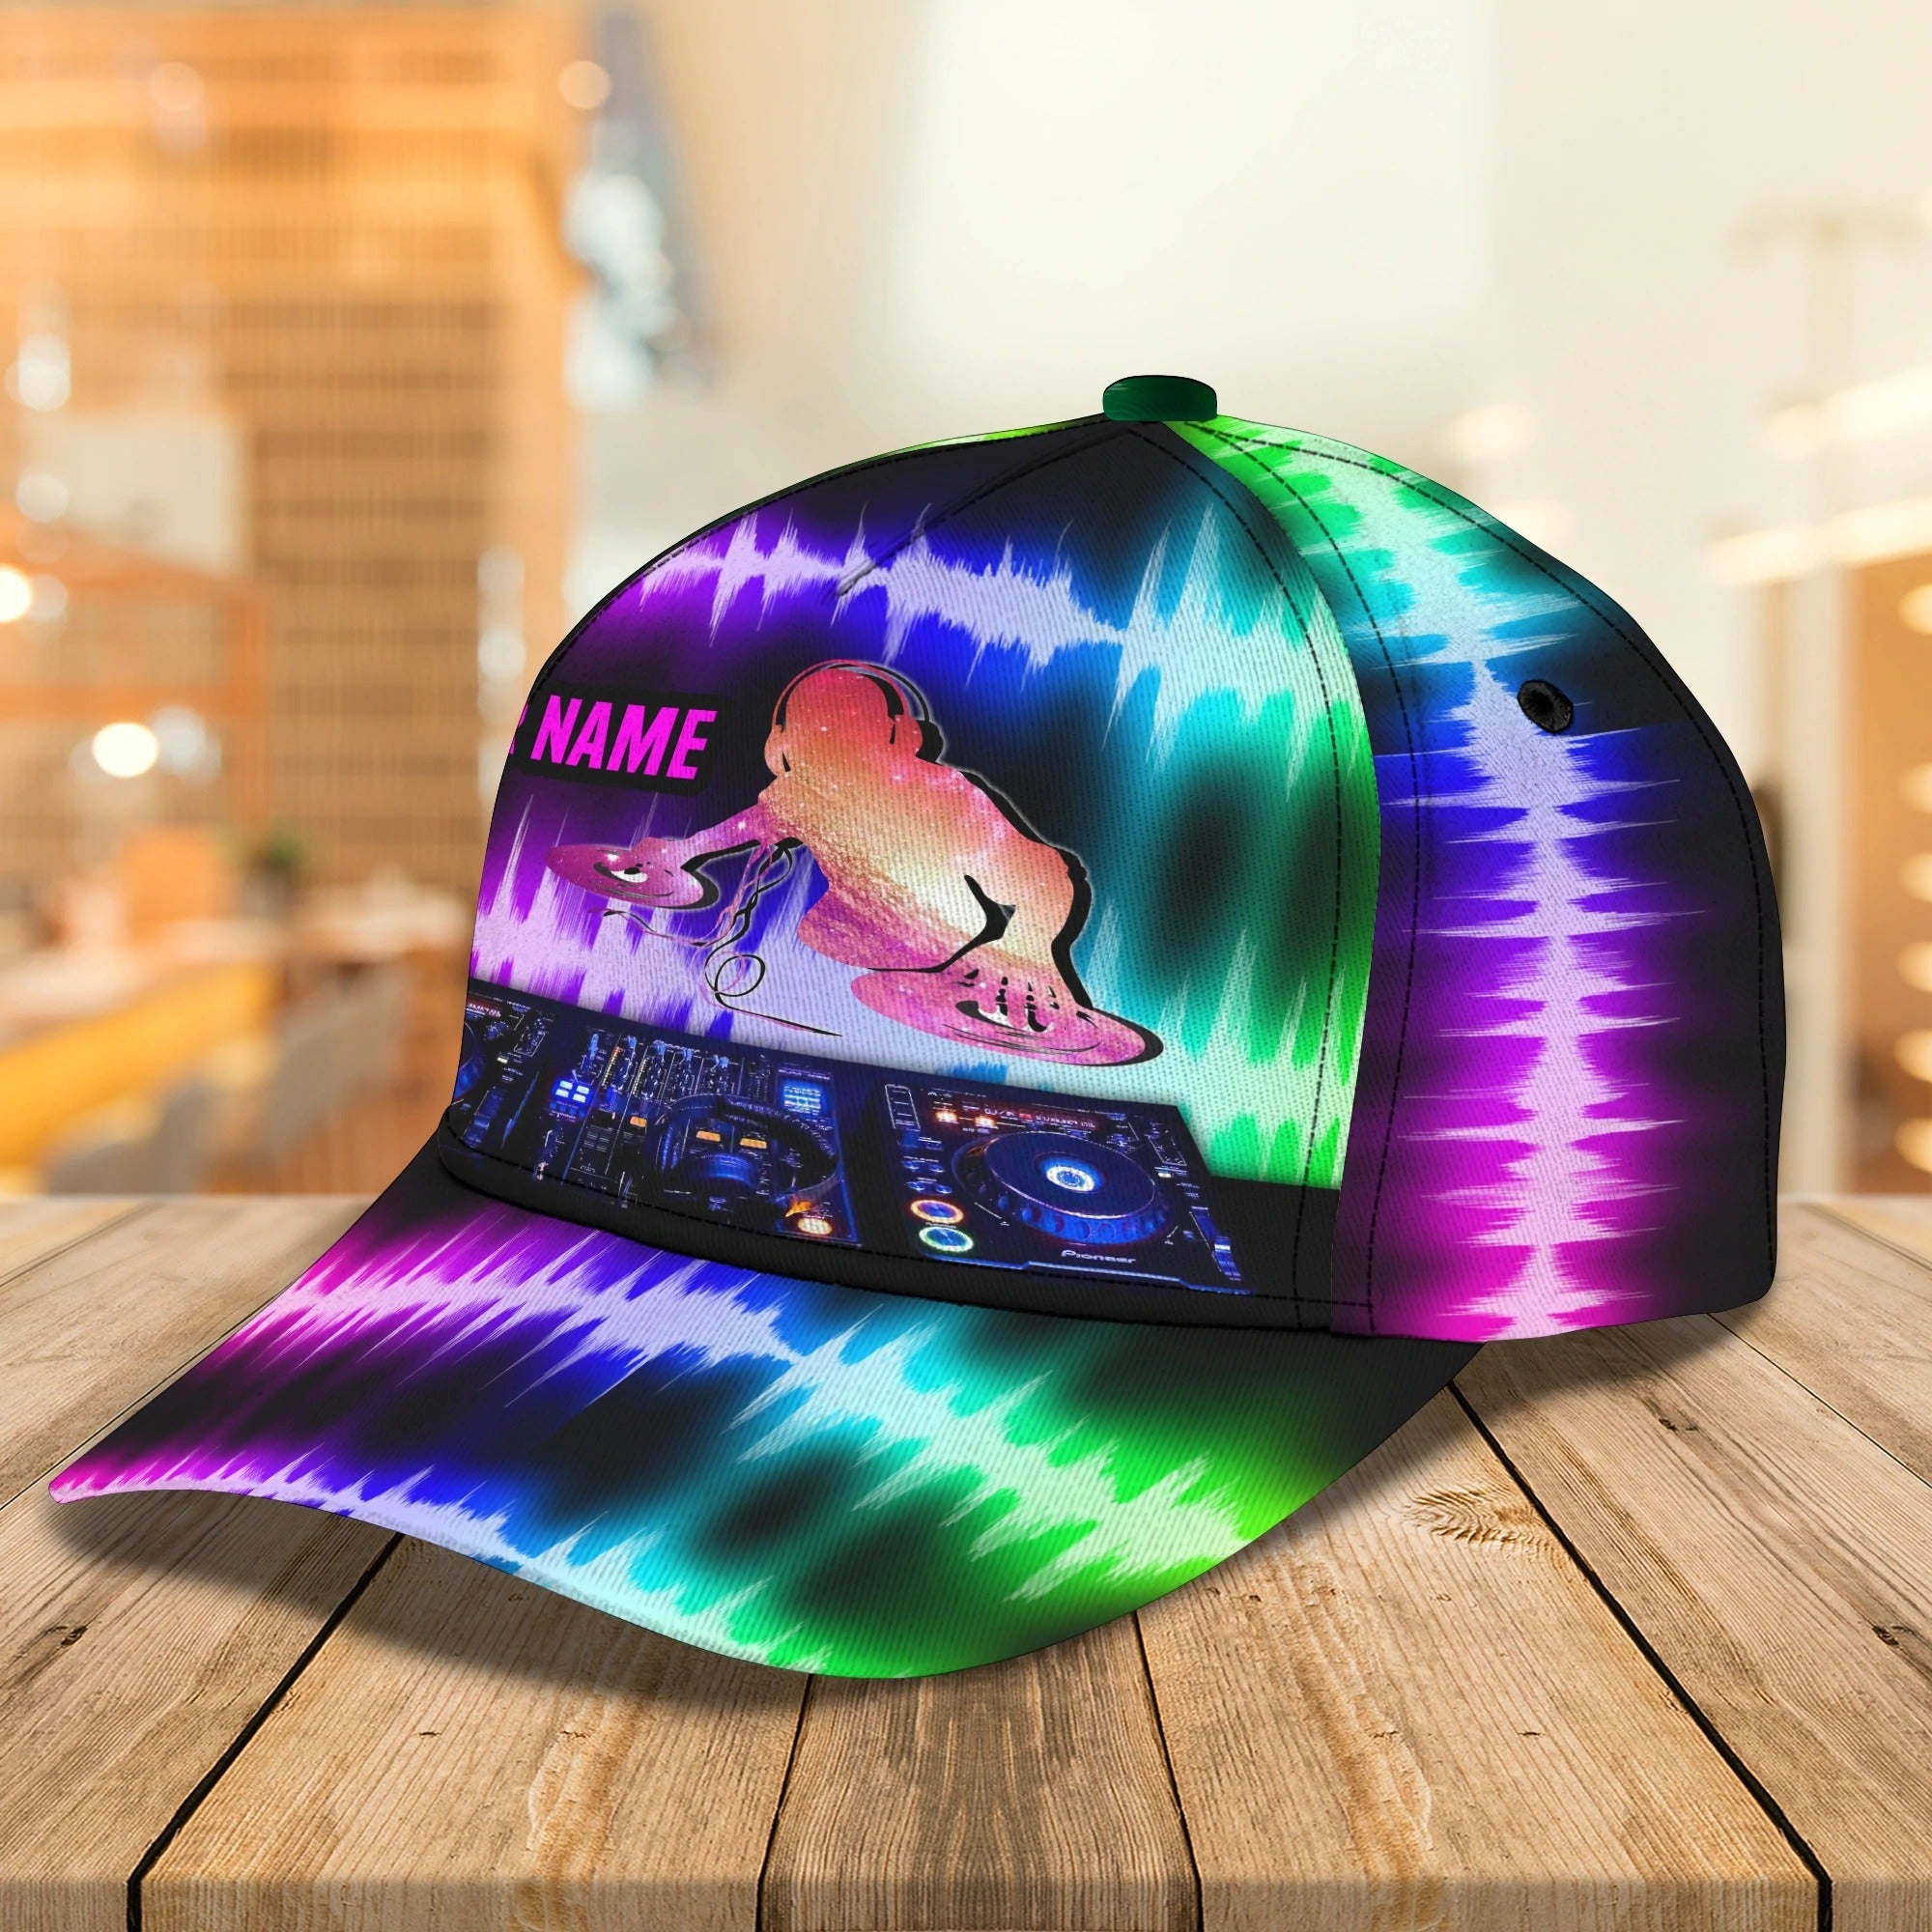 Personalized Colorful 3D Classic Cap Hat For Disc Jockey/ Dj Baseball Cap Hat/ Nonstop Bar Club Cap Hat For Him Her